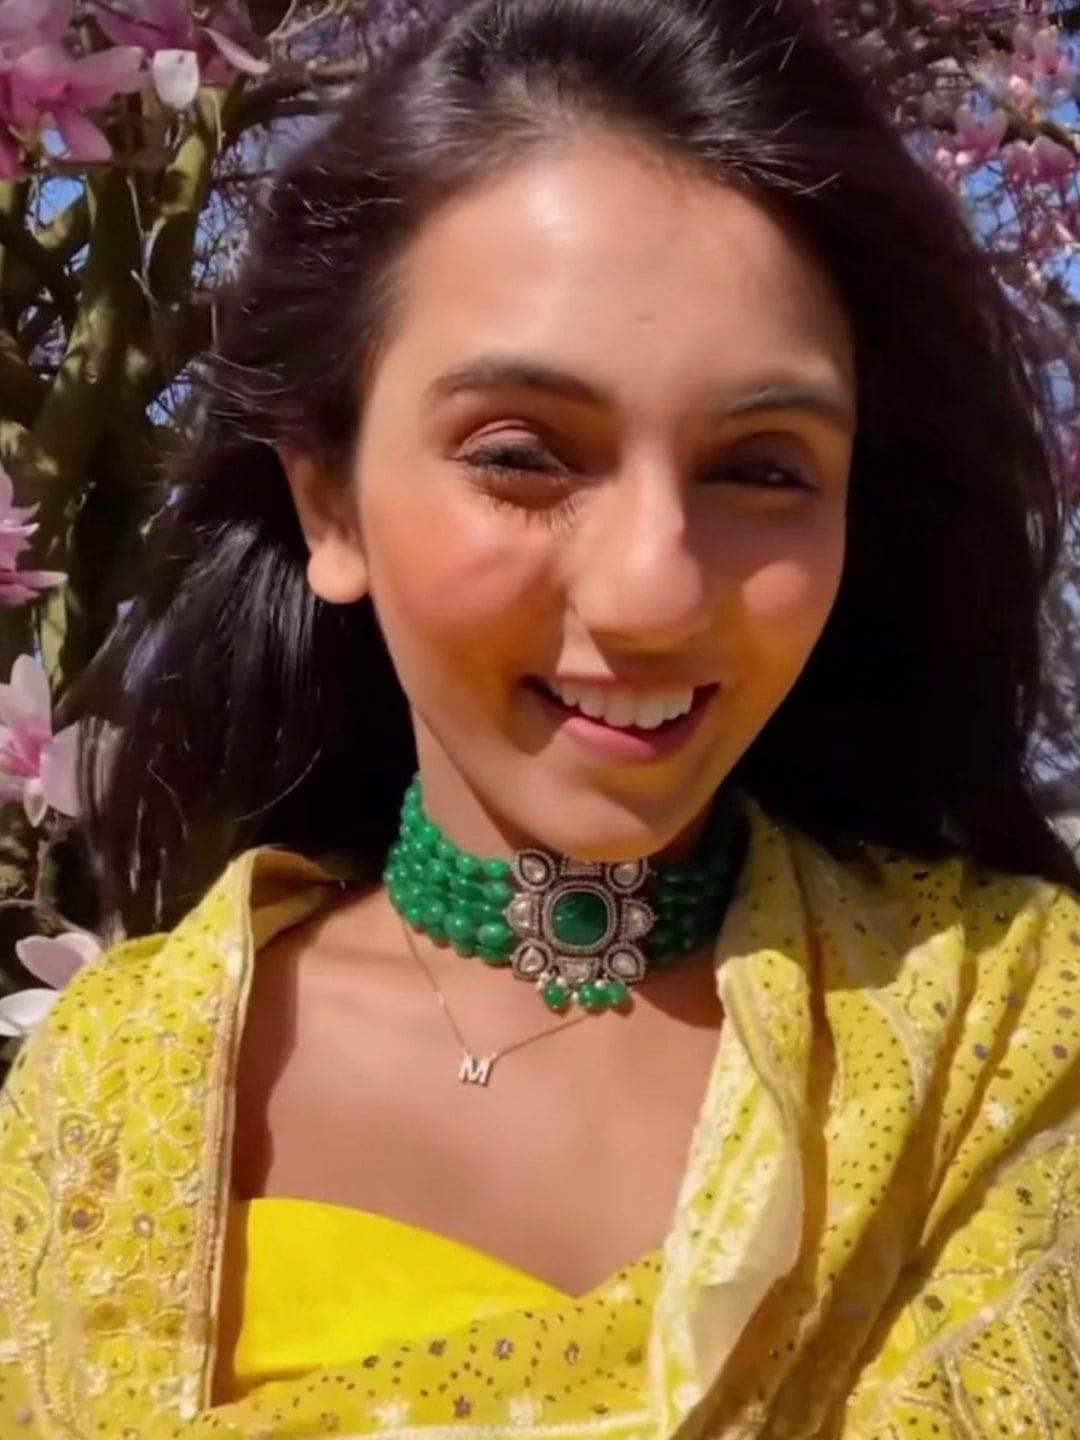 Ishhaara Dark Green Masoom Minawala In Square Pendant Beads Necklace